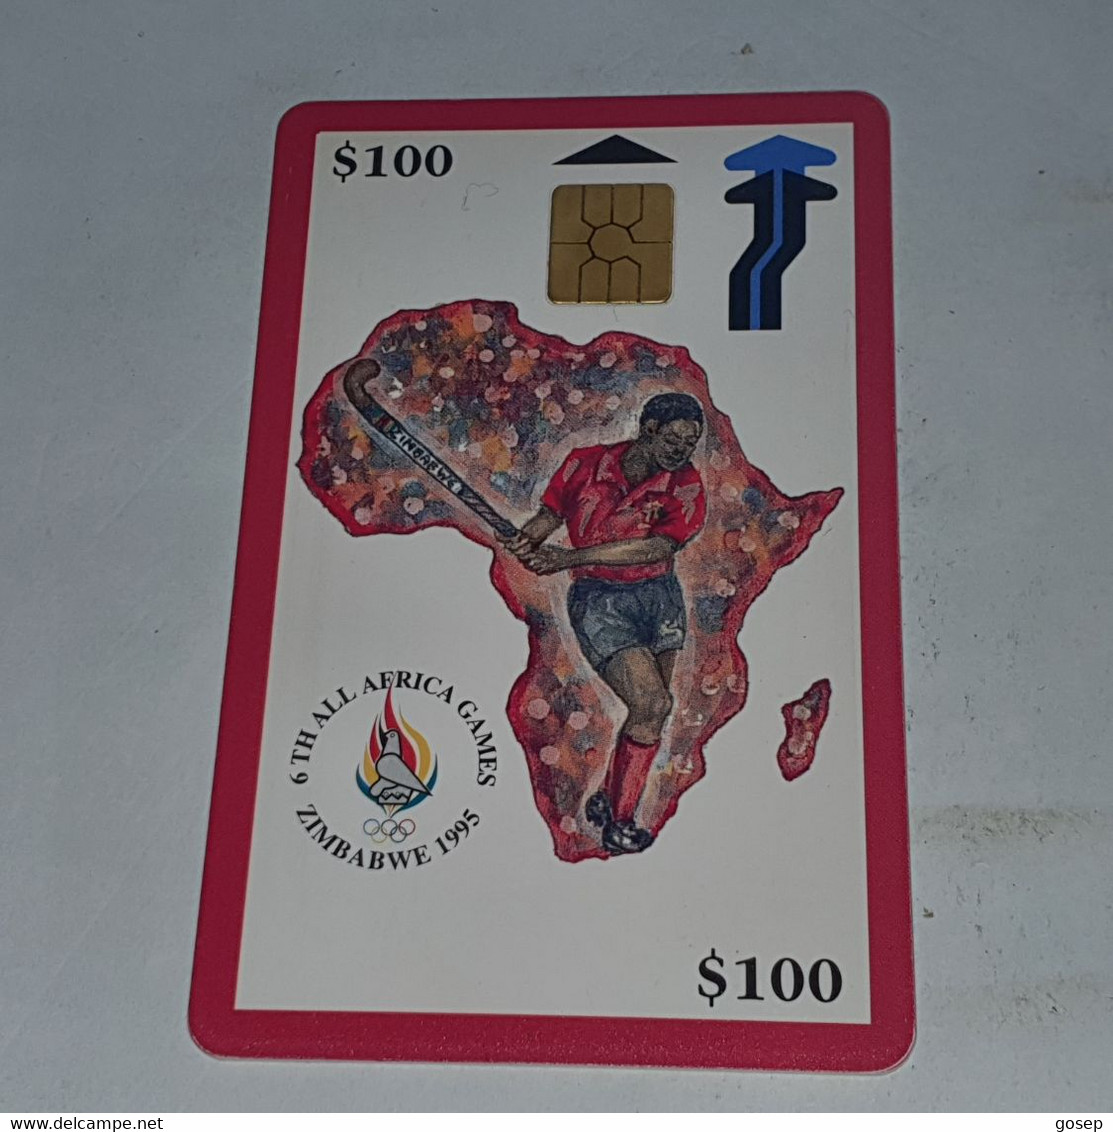 Zimbabwe-(ZIM-05A)-6thall Africa Games Red-(54)-($100)-(1100-057113)-(9/98)used Card+1card Free - Zimbabwe